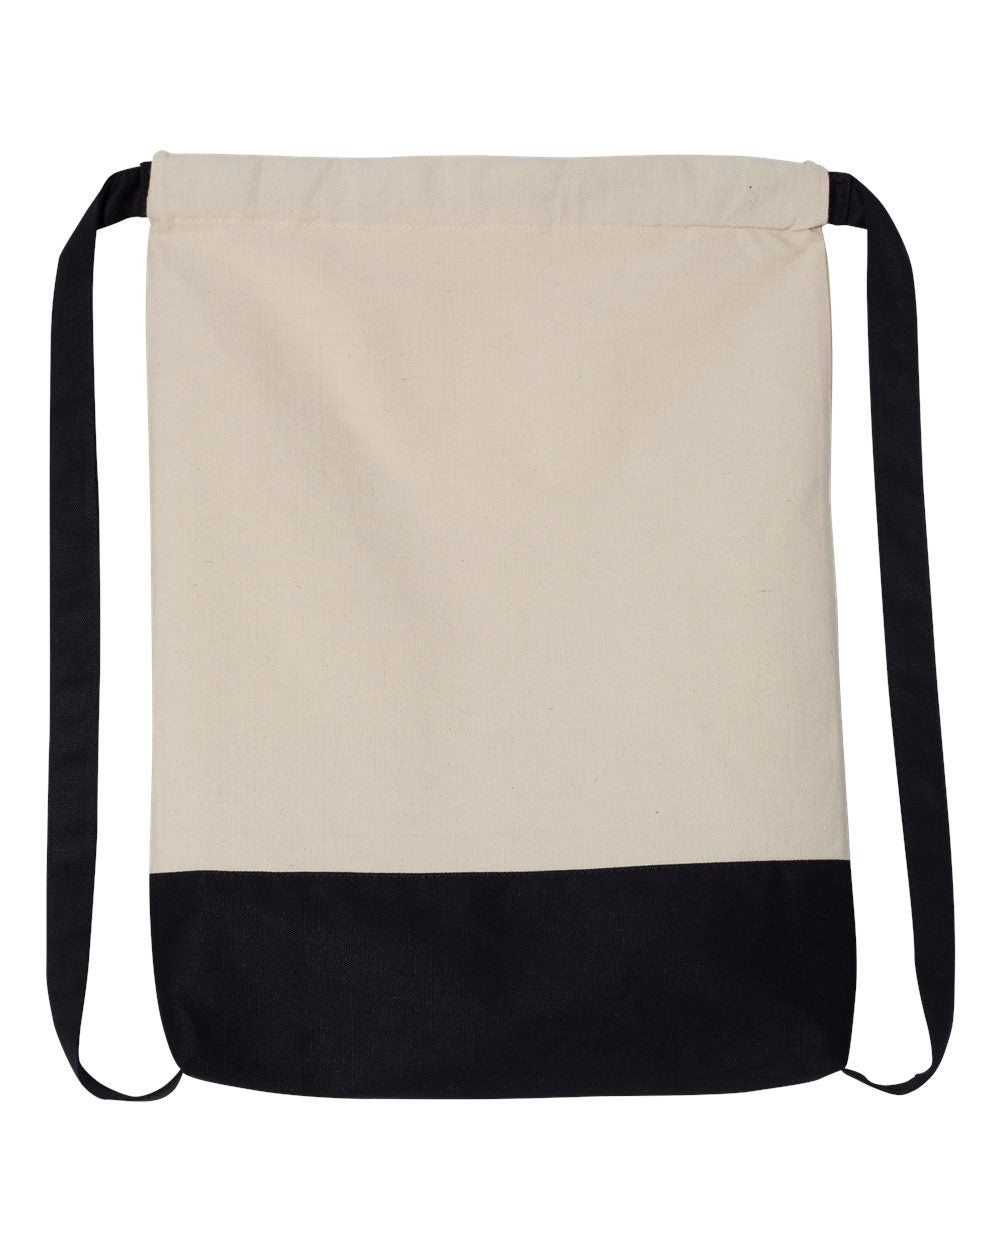 Sandyston Soccer design 5 Drawstring Bag